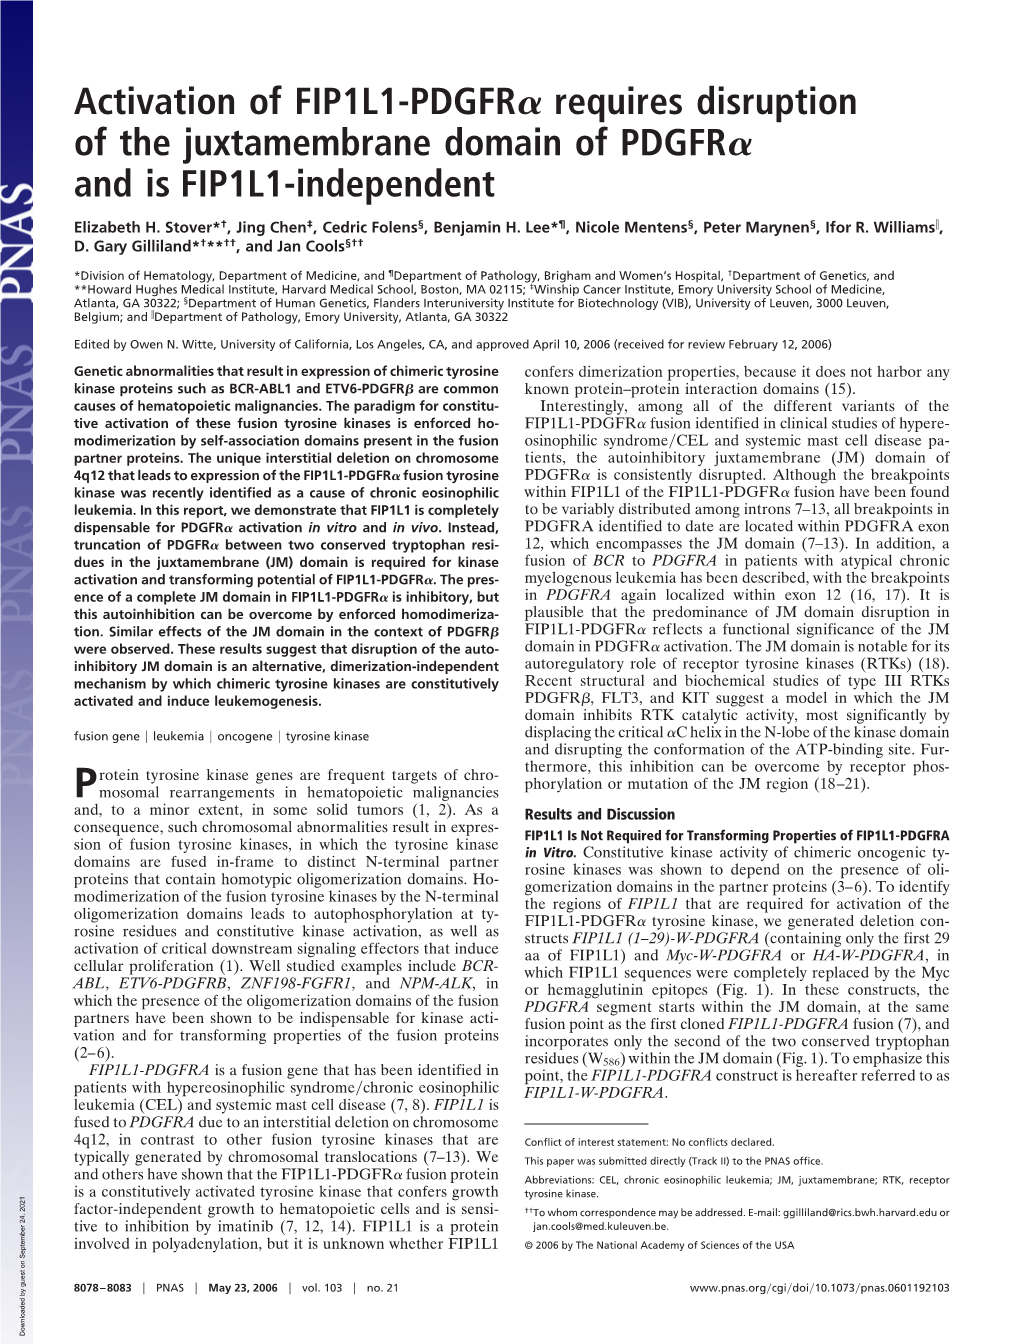 Activation of FIP1L1-PDGFR Requires Disruption of the Juxtamembrane